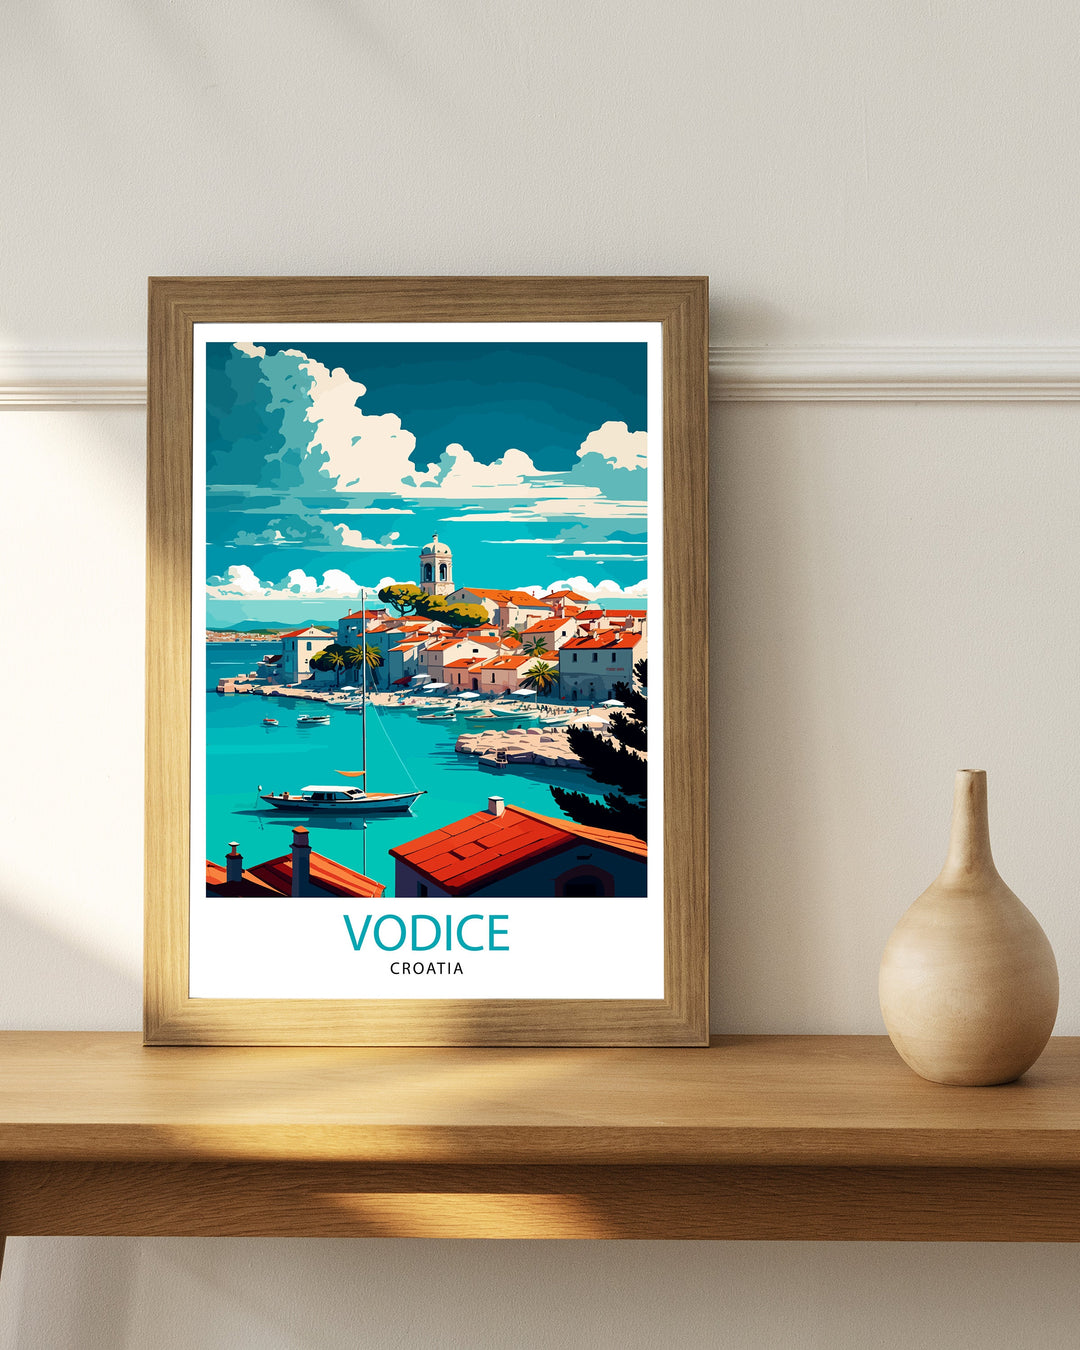 Vodice Croatia Travel Print Vodice Wall Art Vodice Home Decor Vodice Croatia Illustration Travel Poster Gift For Croatia Lovers Croatia Home